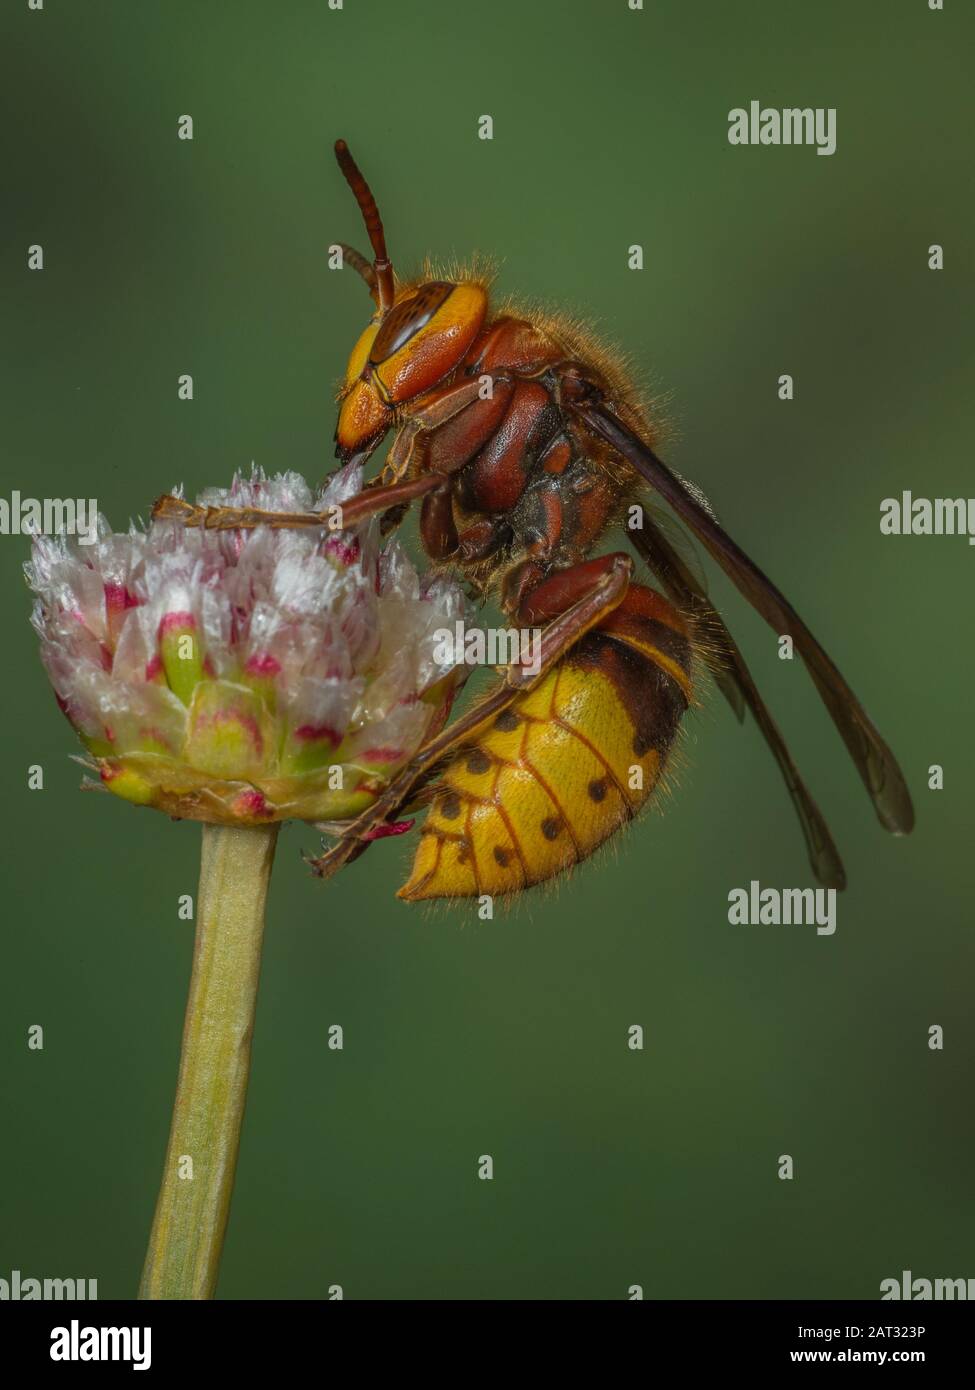 Hornet queen - Vespa crabro - on a flower stem Stock Photo